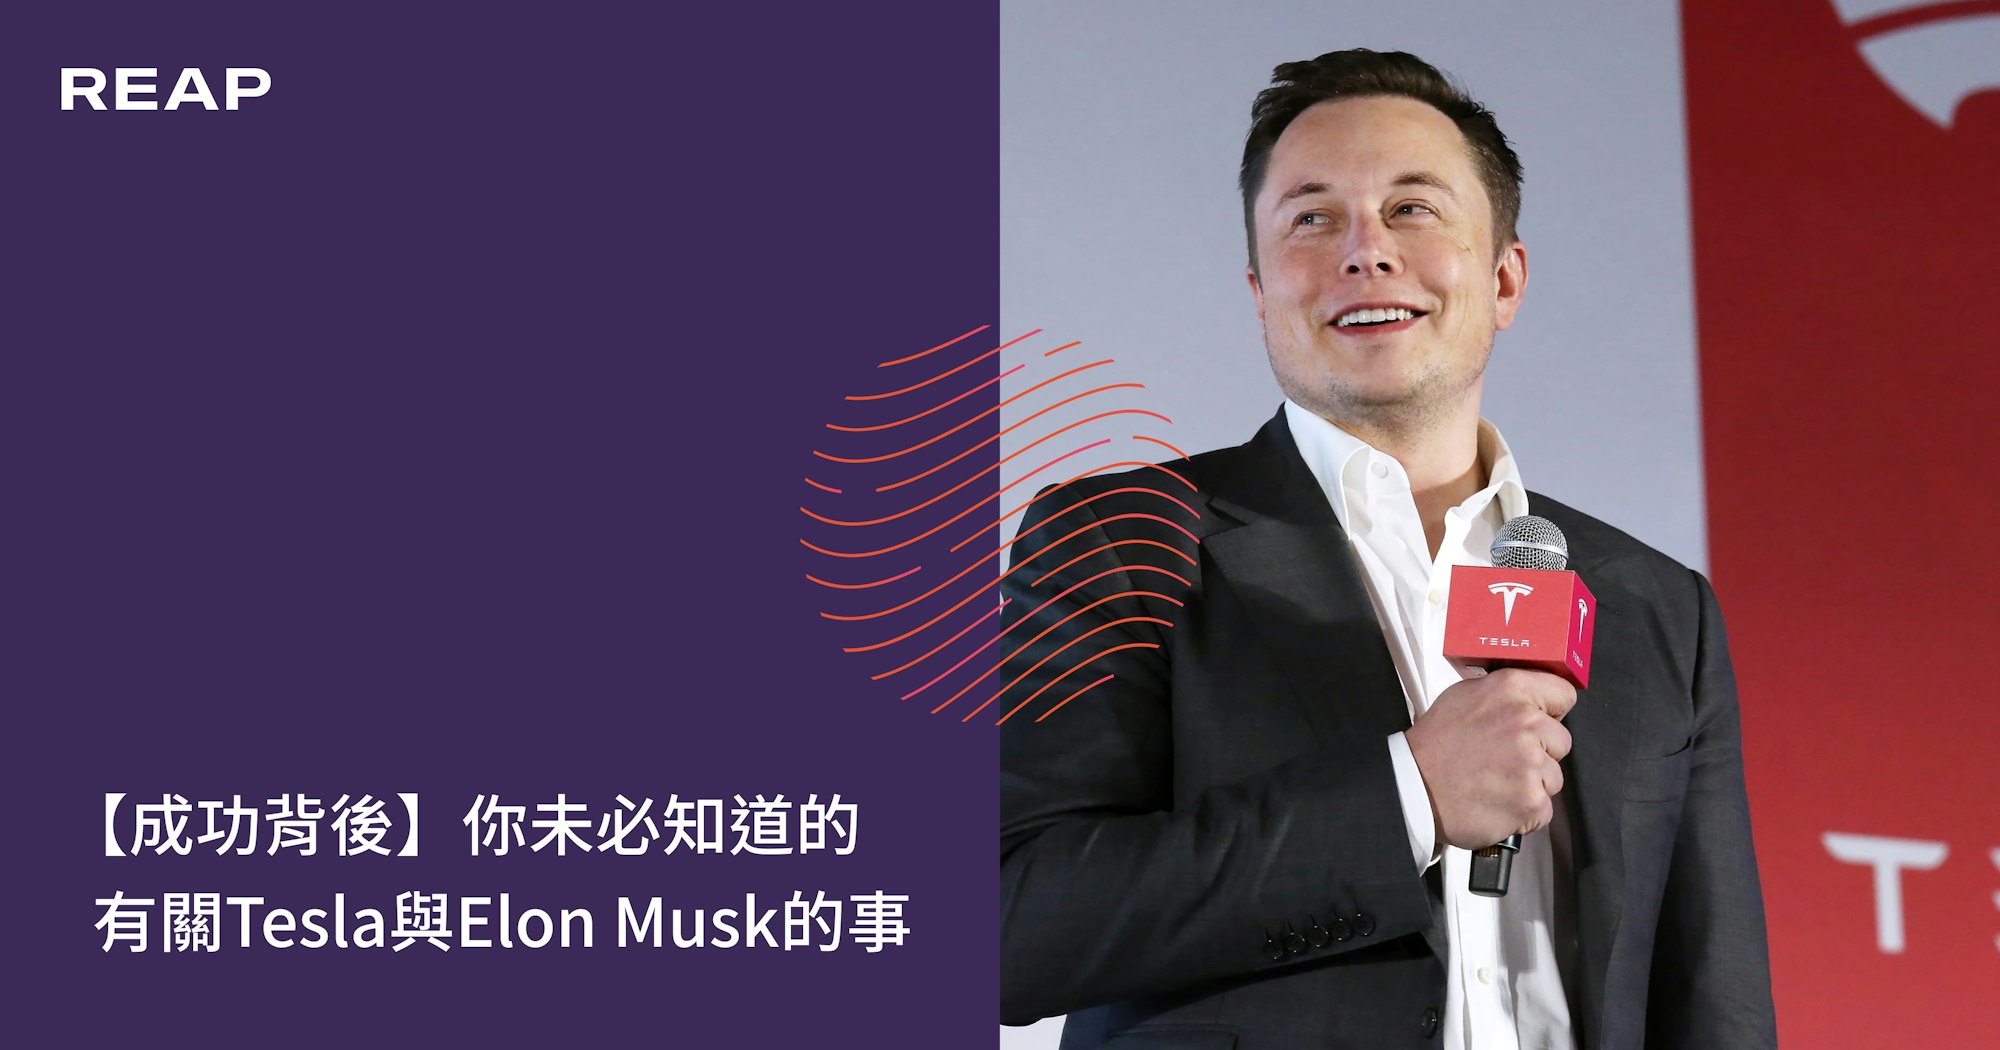 Cover Image for 【成功背後】你未必知道的有關Tesla與Elon Musk的事